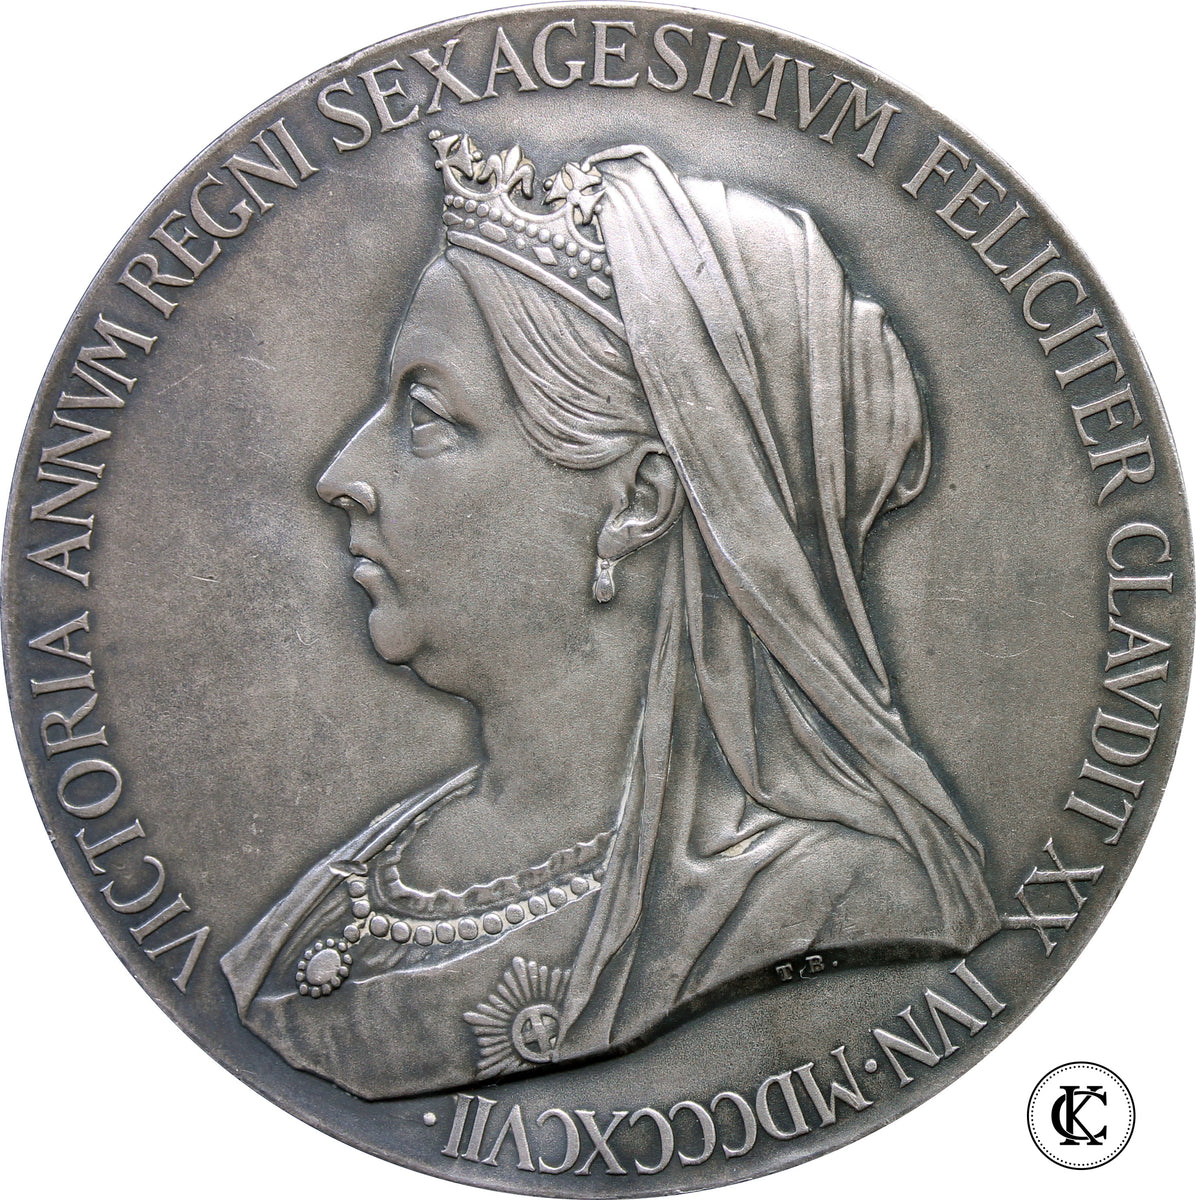 1837-1897 Victoria Diamond Jubilee silver medallion with 